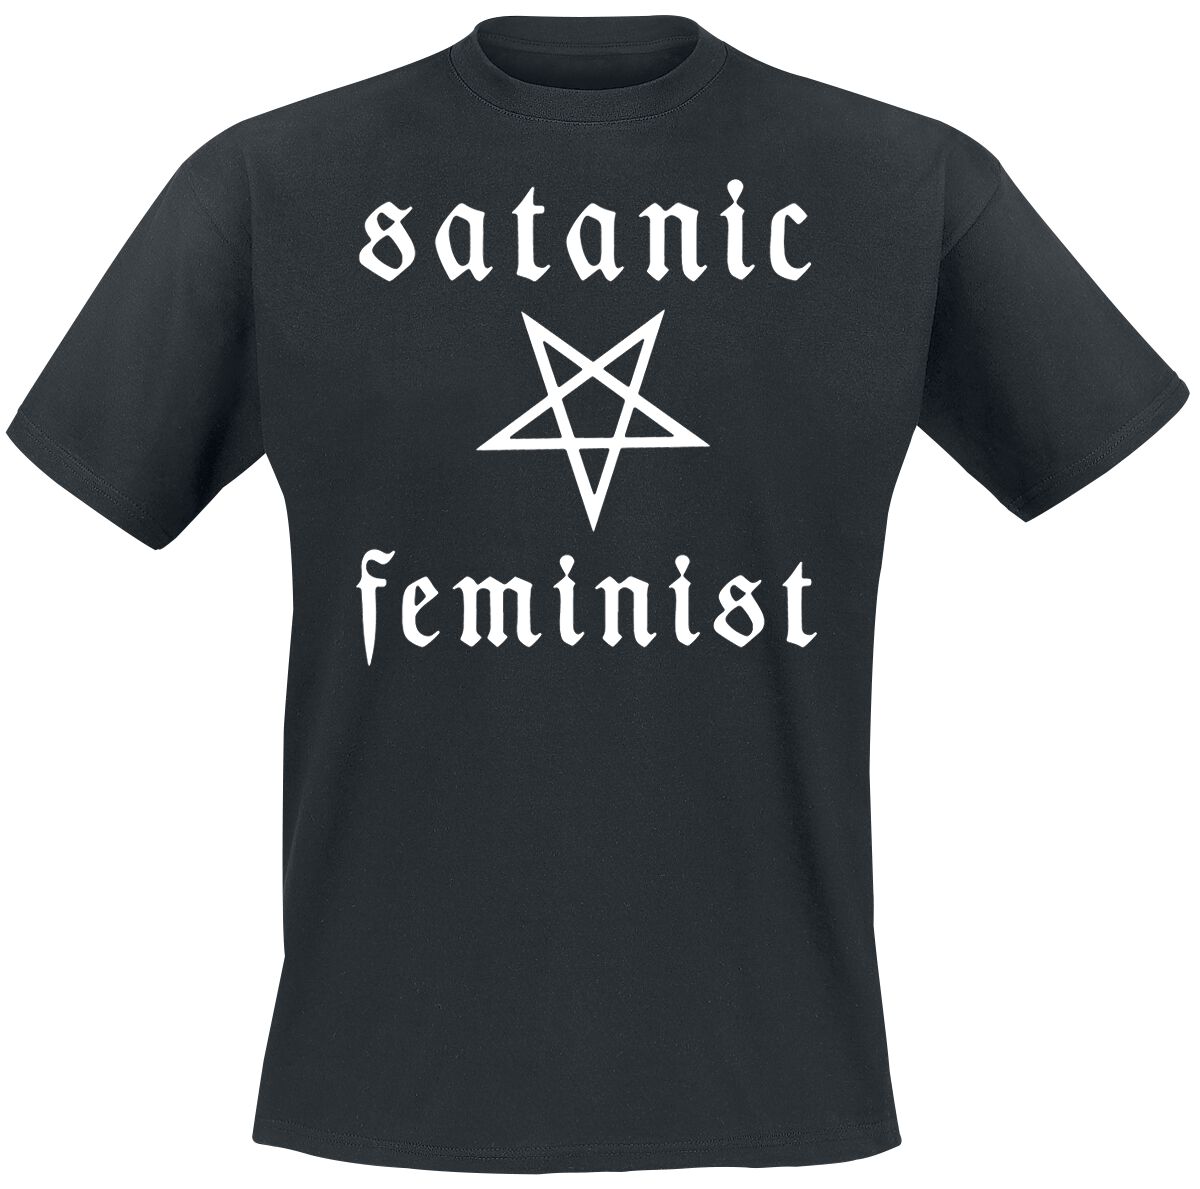 twin temple t-shirt - satanic feminist - xl bis xxl - fÃ¼r mÃ¤nner - grÃ¶ÃŸe xl - - lizenziertes merchandise! schwarz